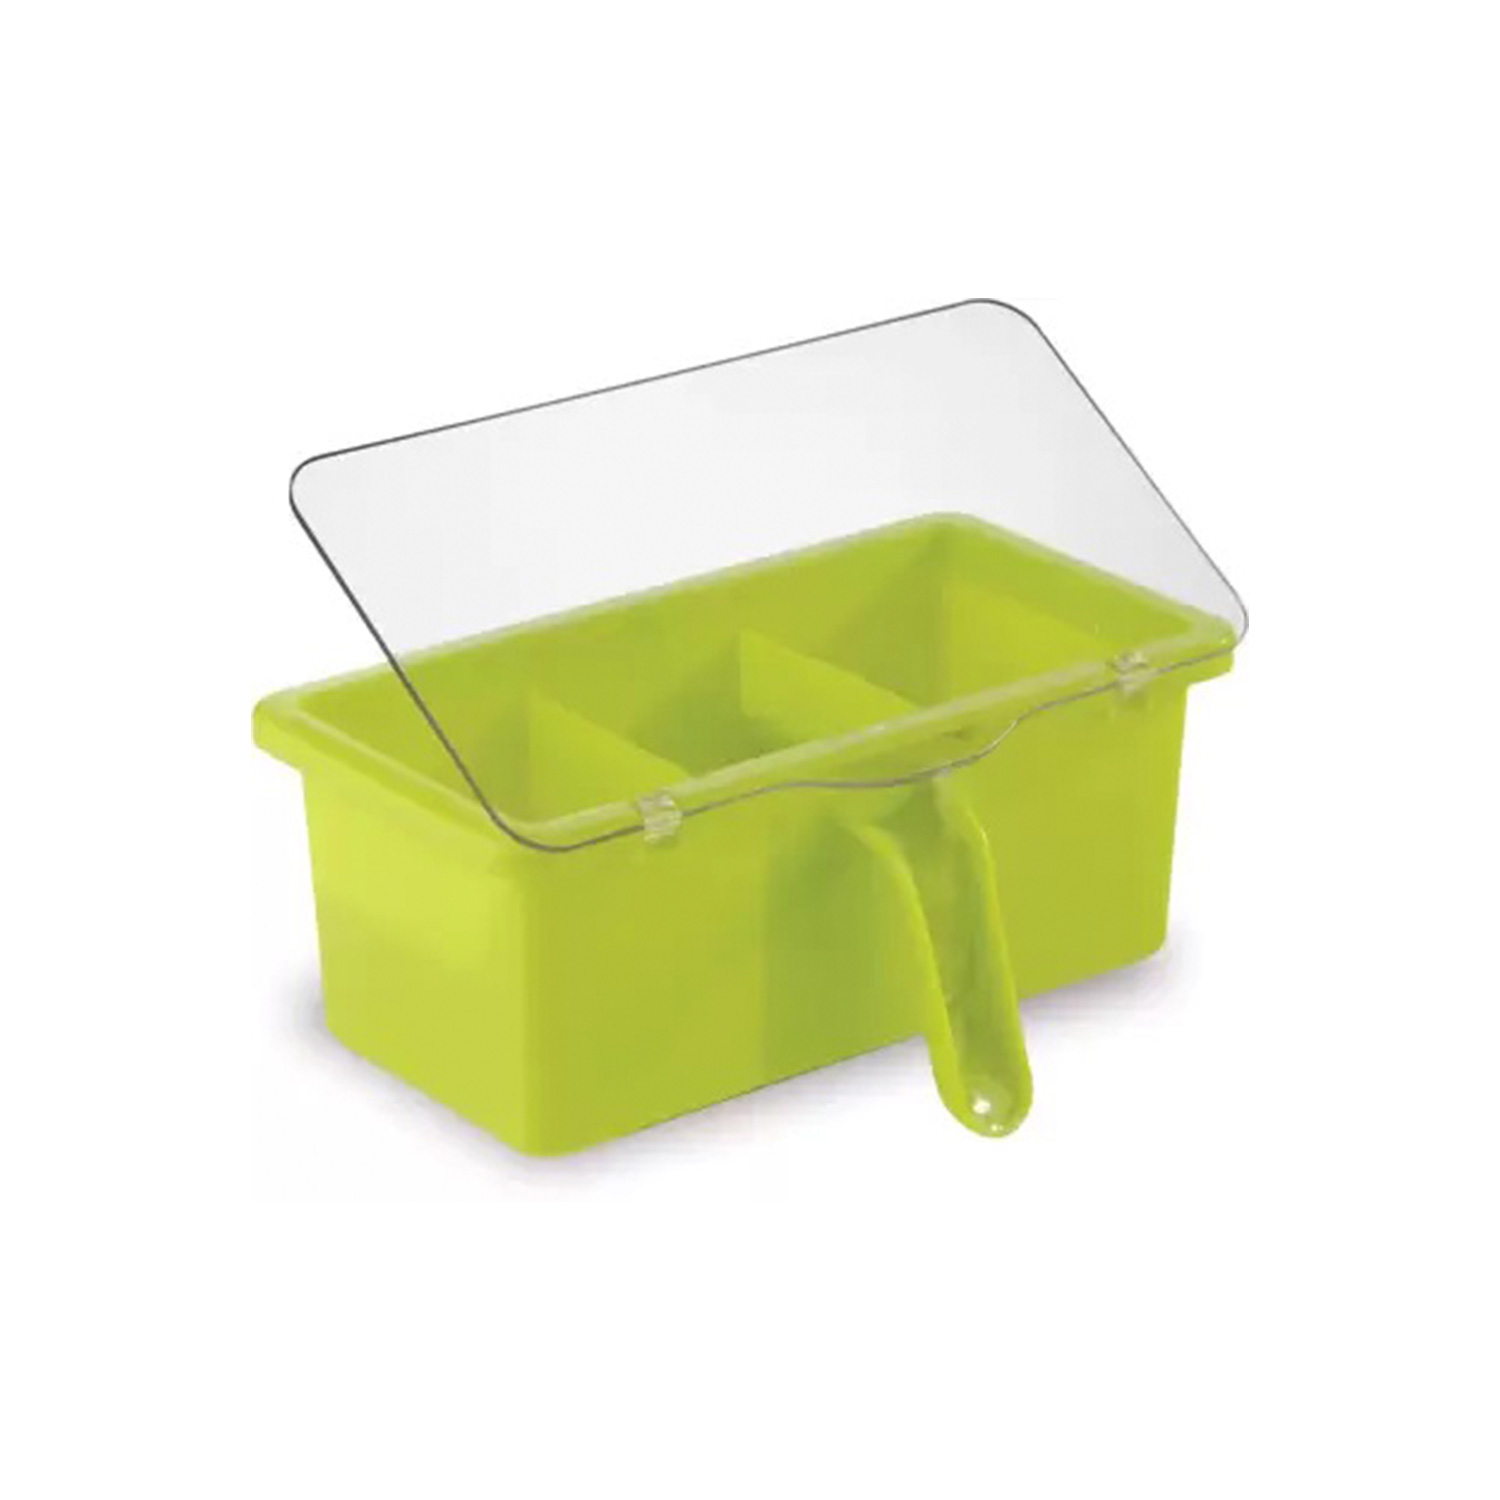 Sukhson India Plastic Spice Container  – 500 ml (Green)